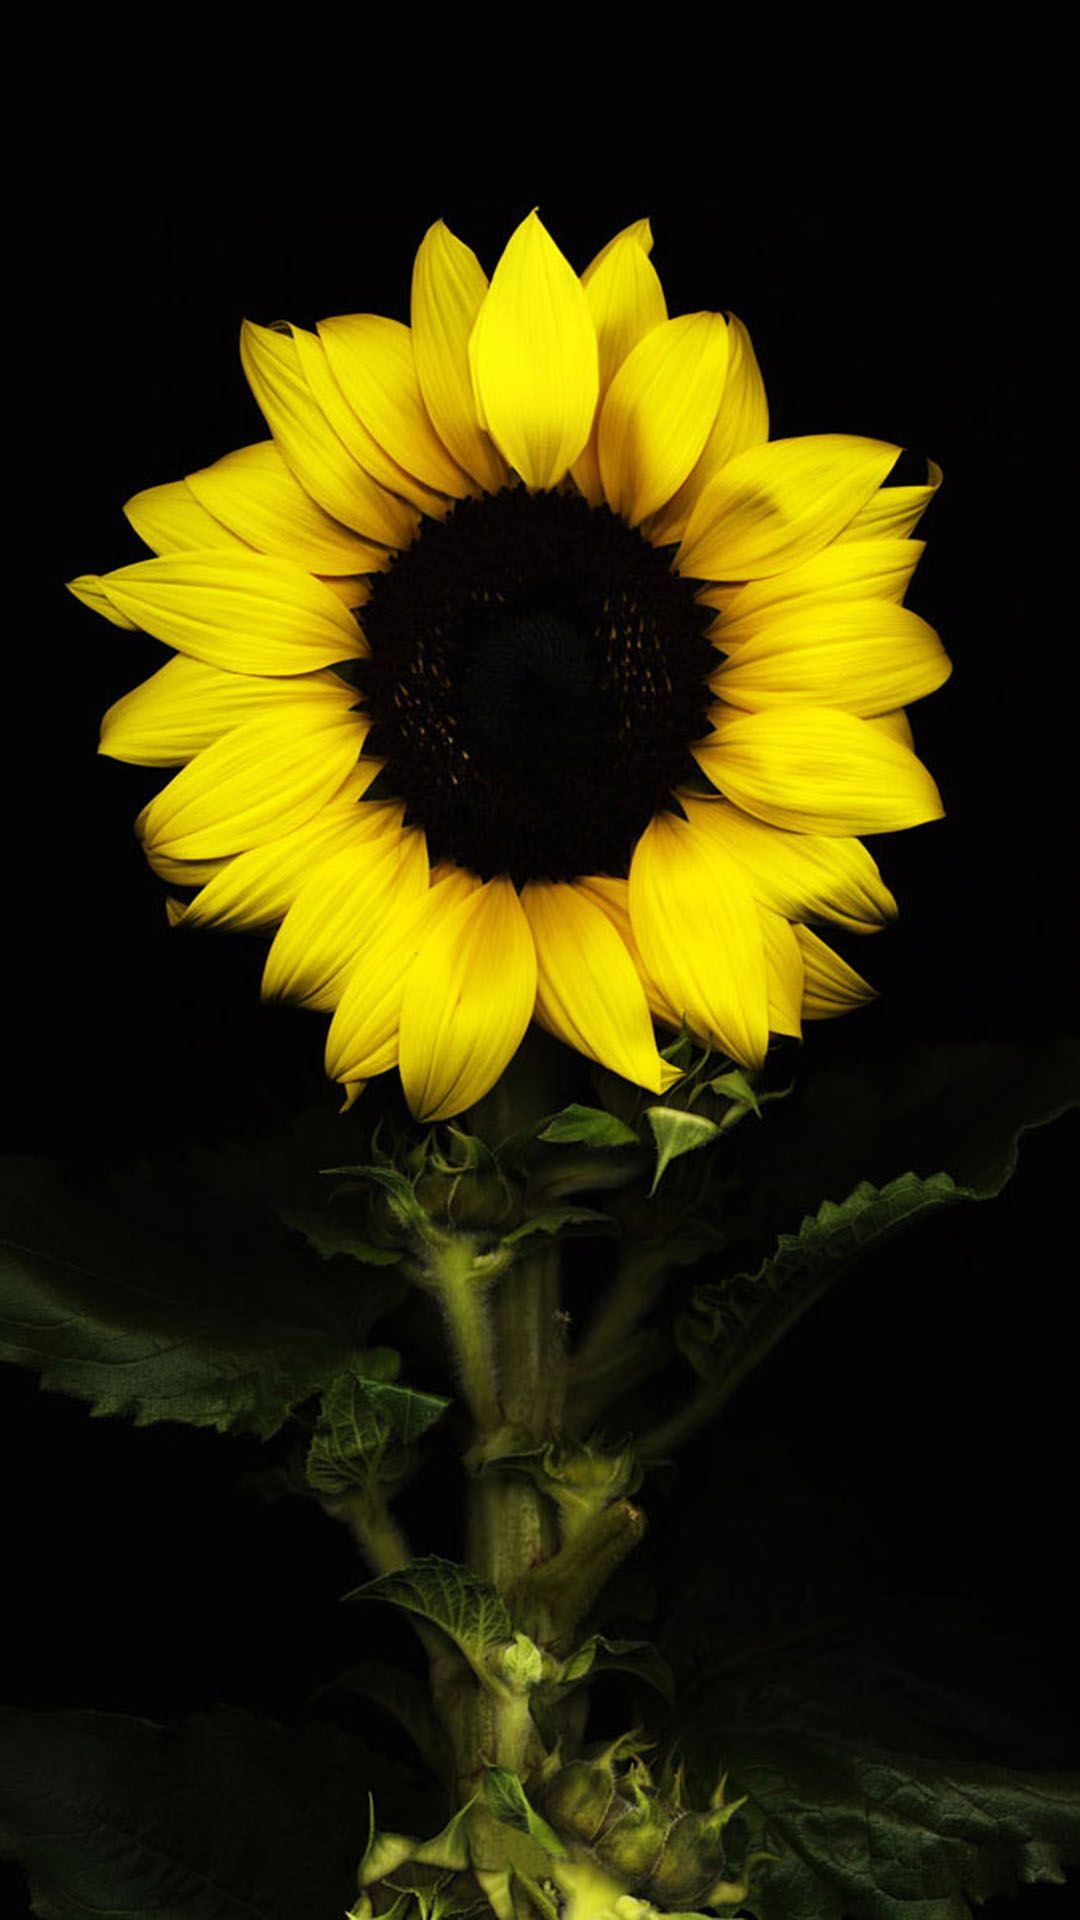 sunflower black. Sunflower picture, Sunflower wallpaper, Sunflower iphone wallpaper